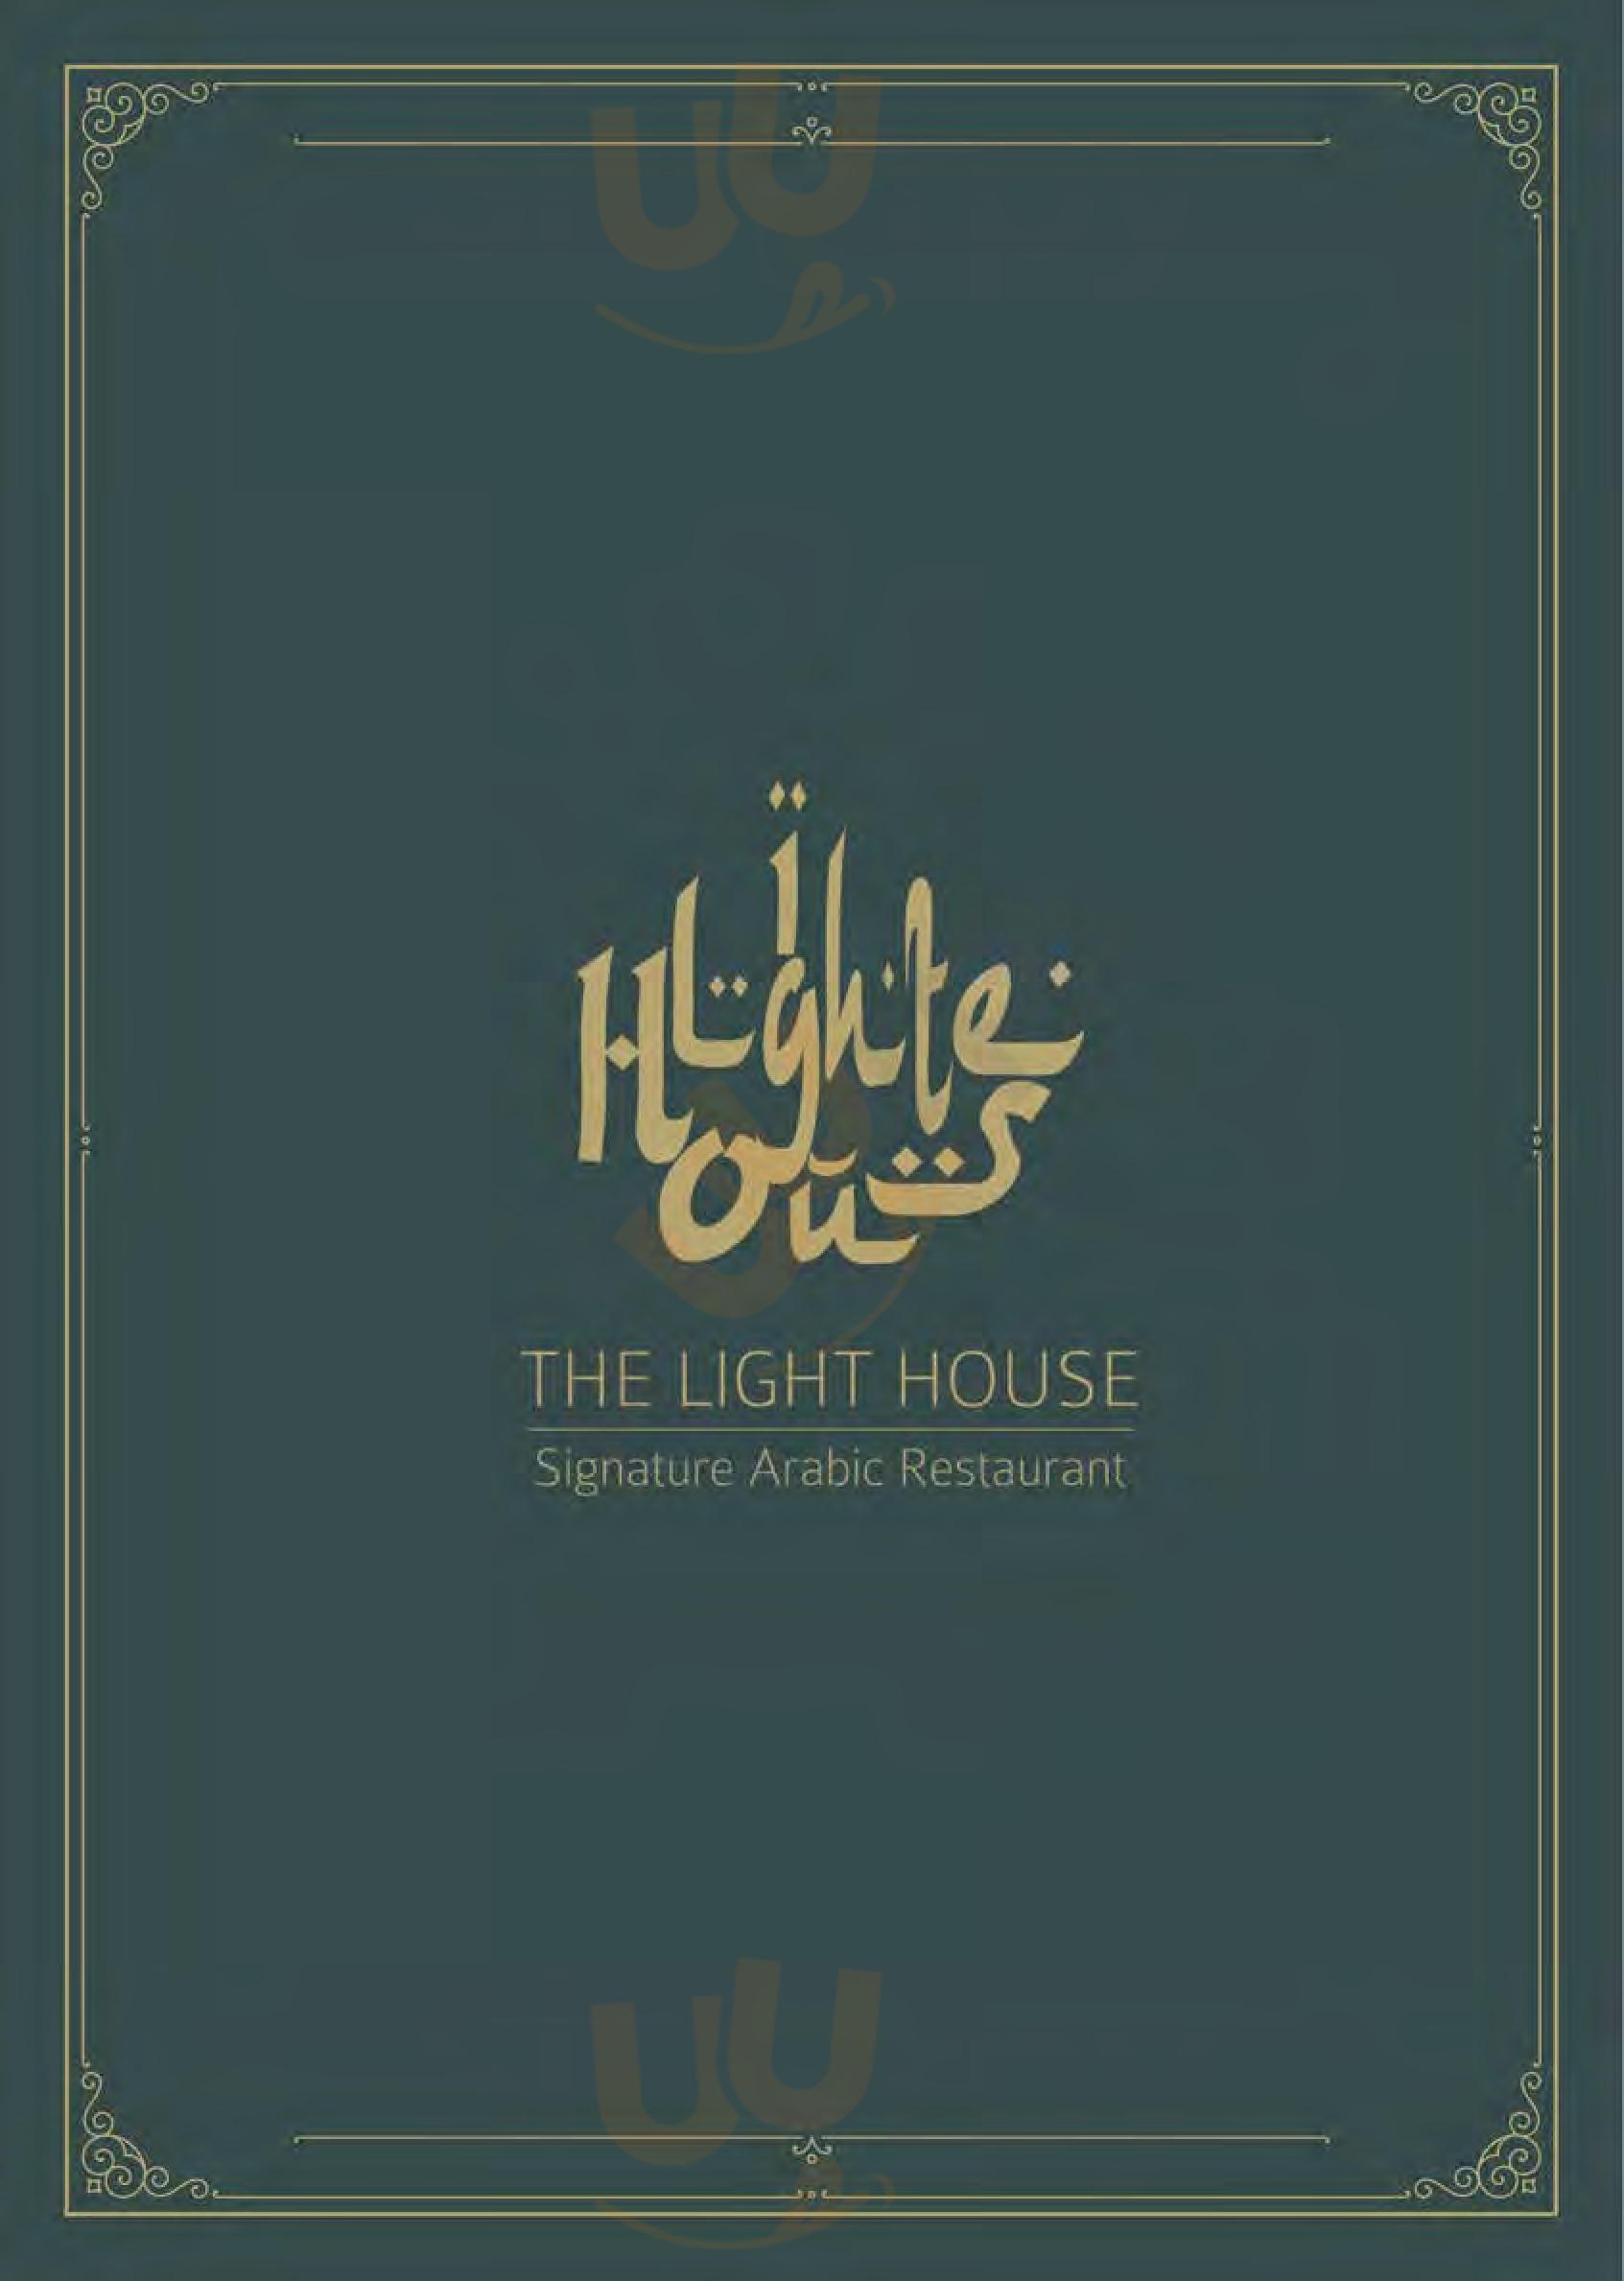 The Light House Kozhikode Menu - 1